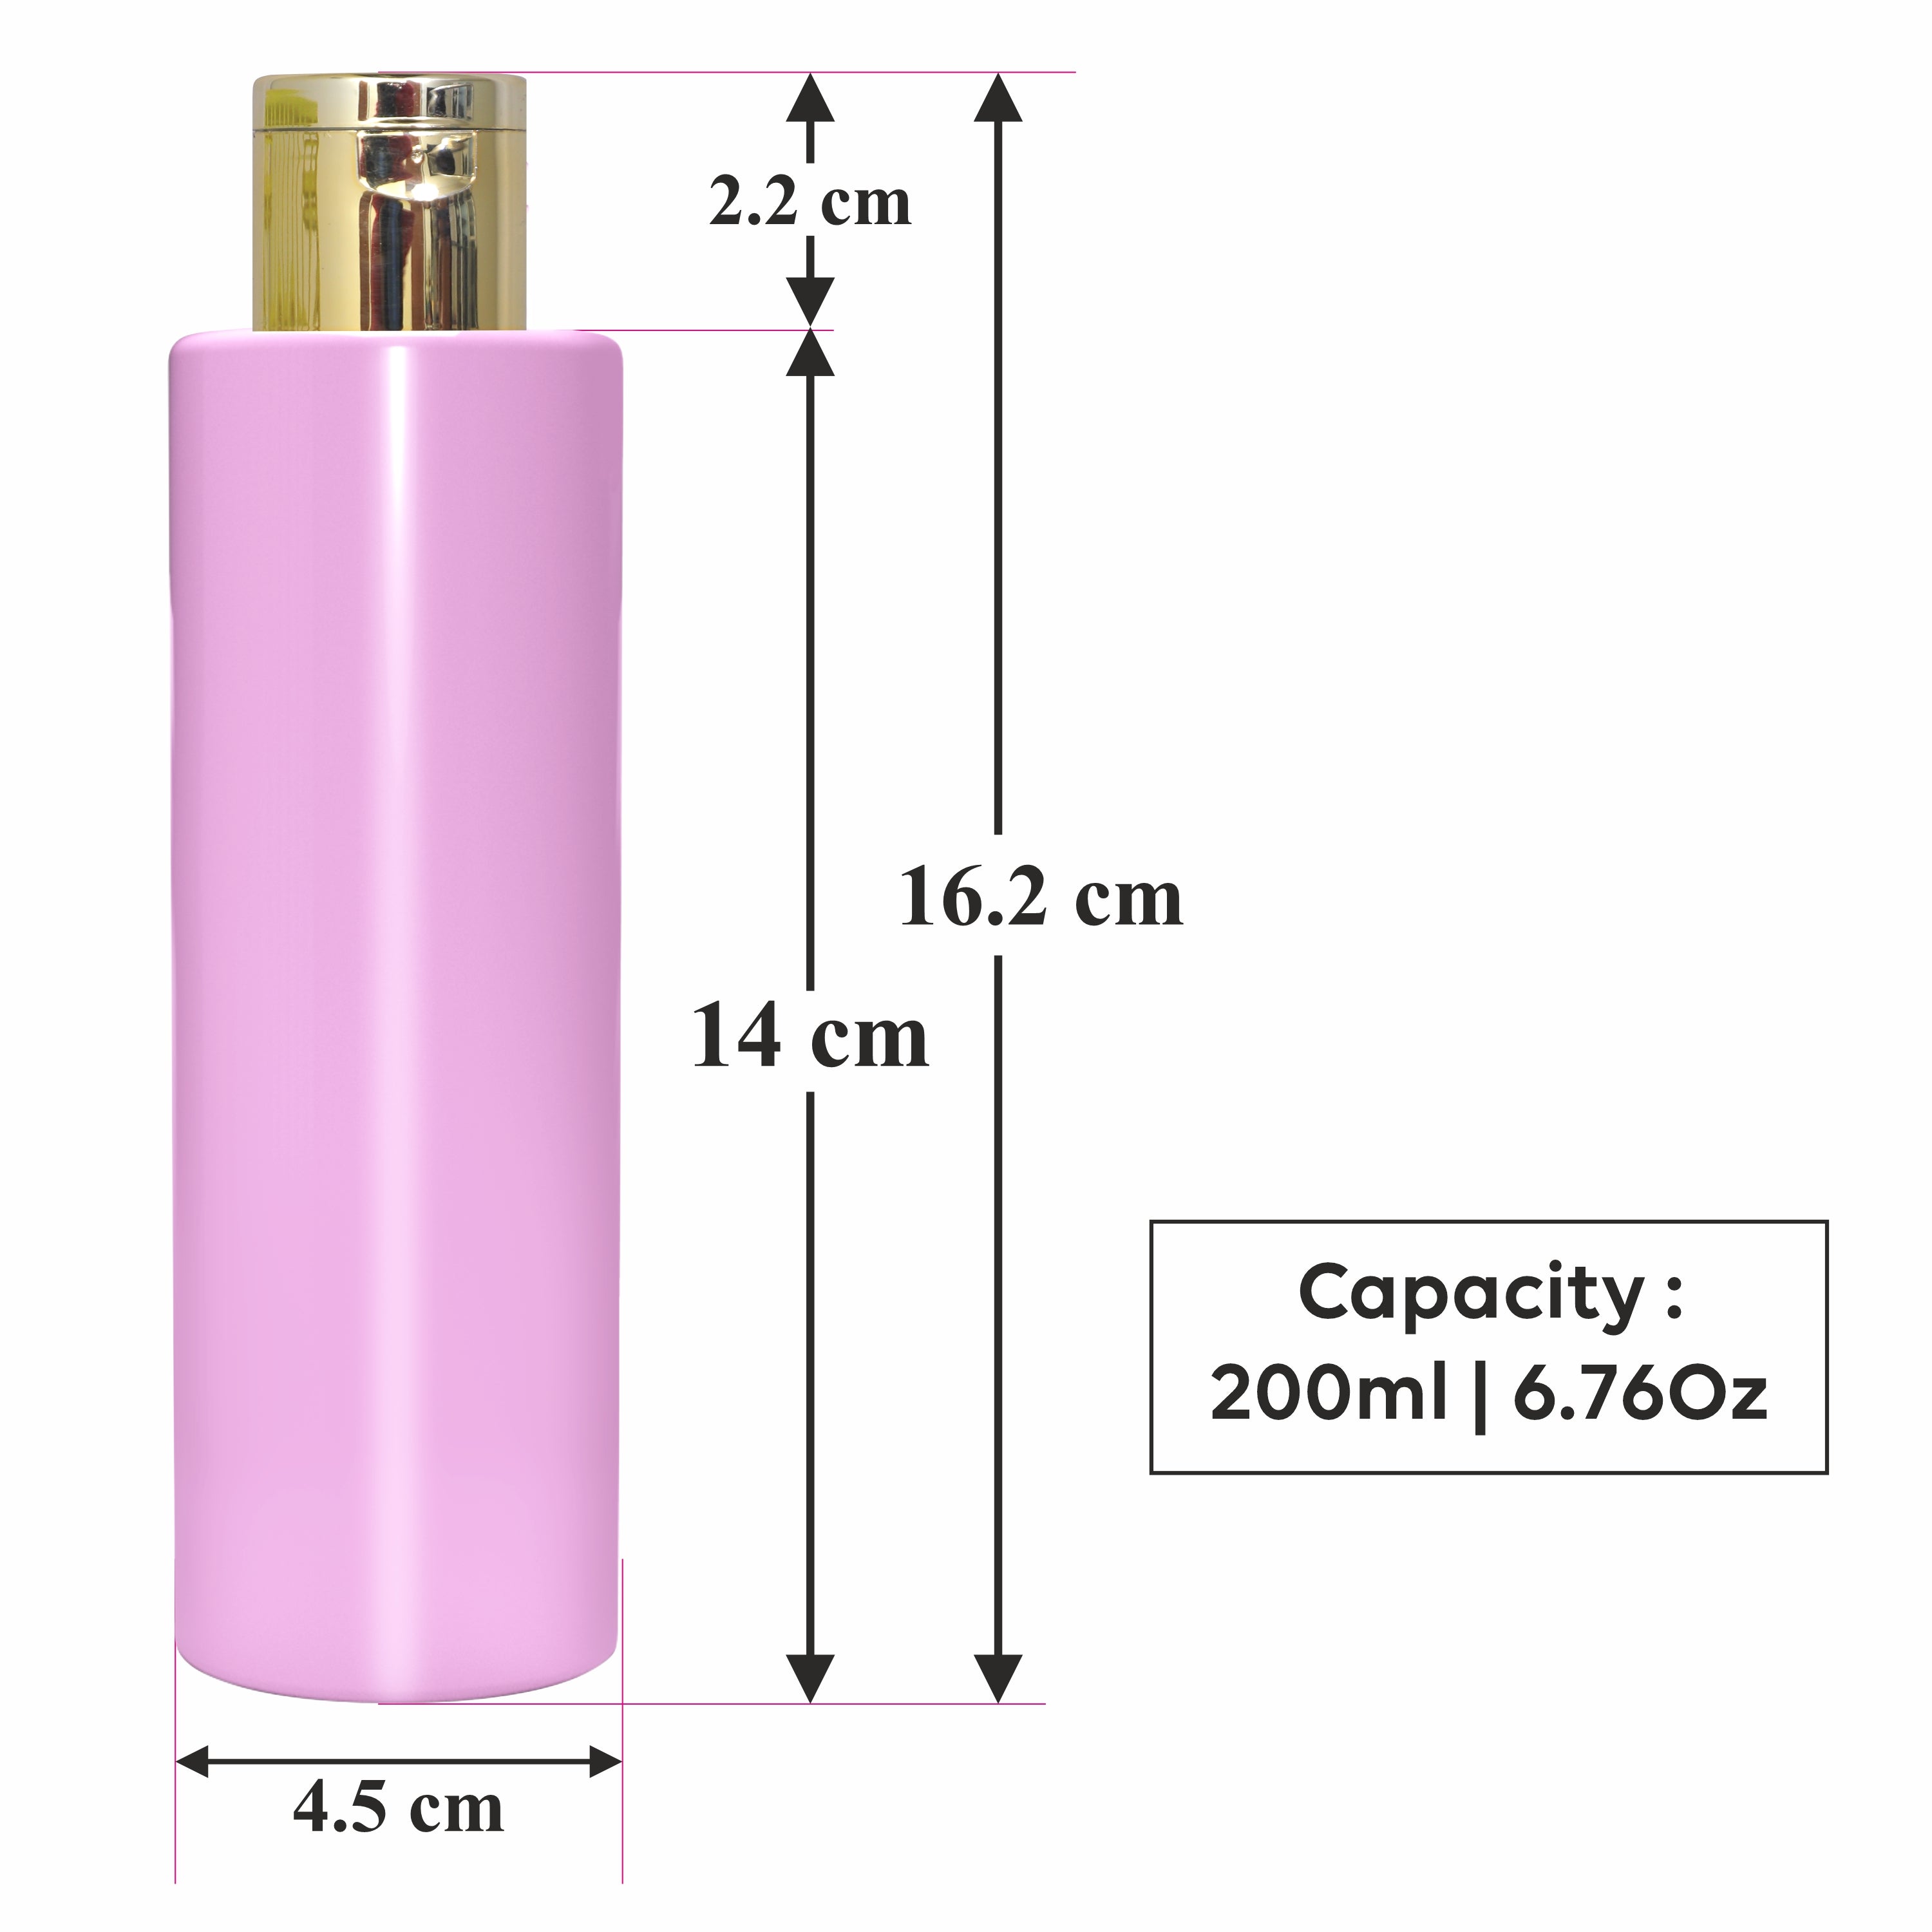 |ZMP01| LIGHT PINK ROUND SHAPE FLAT SHOULDER PET BOTTLE WITH GOLD PLATED FLIPTOP CAP Available Size: 100ml & 200ml